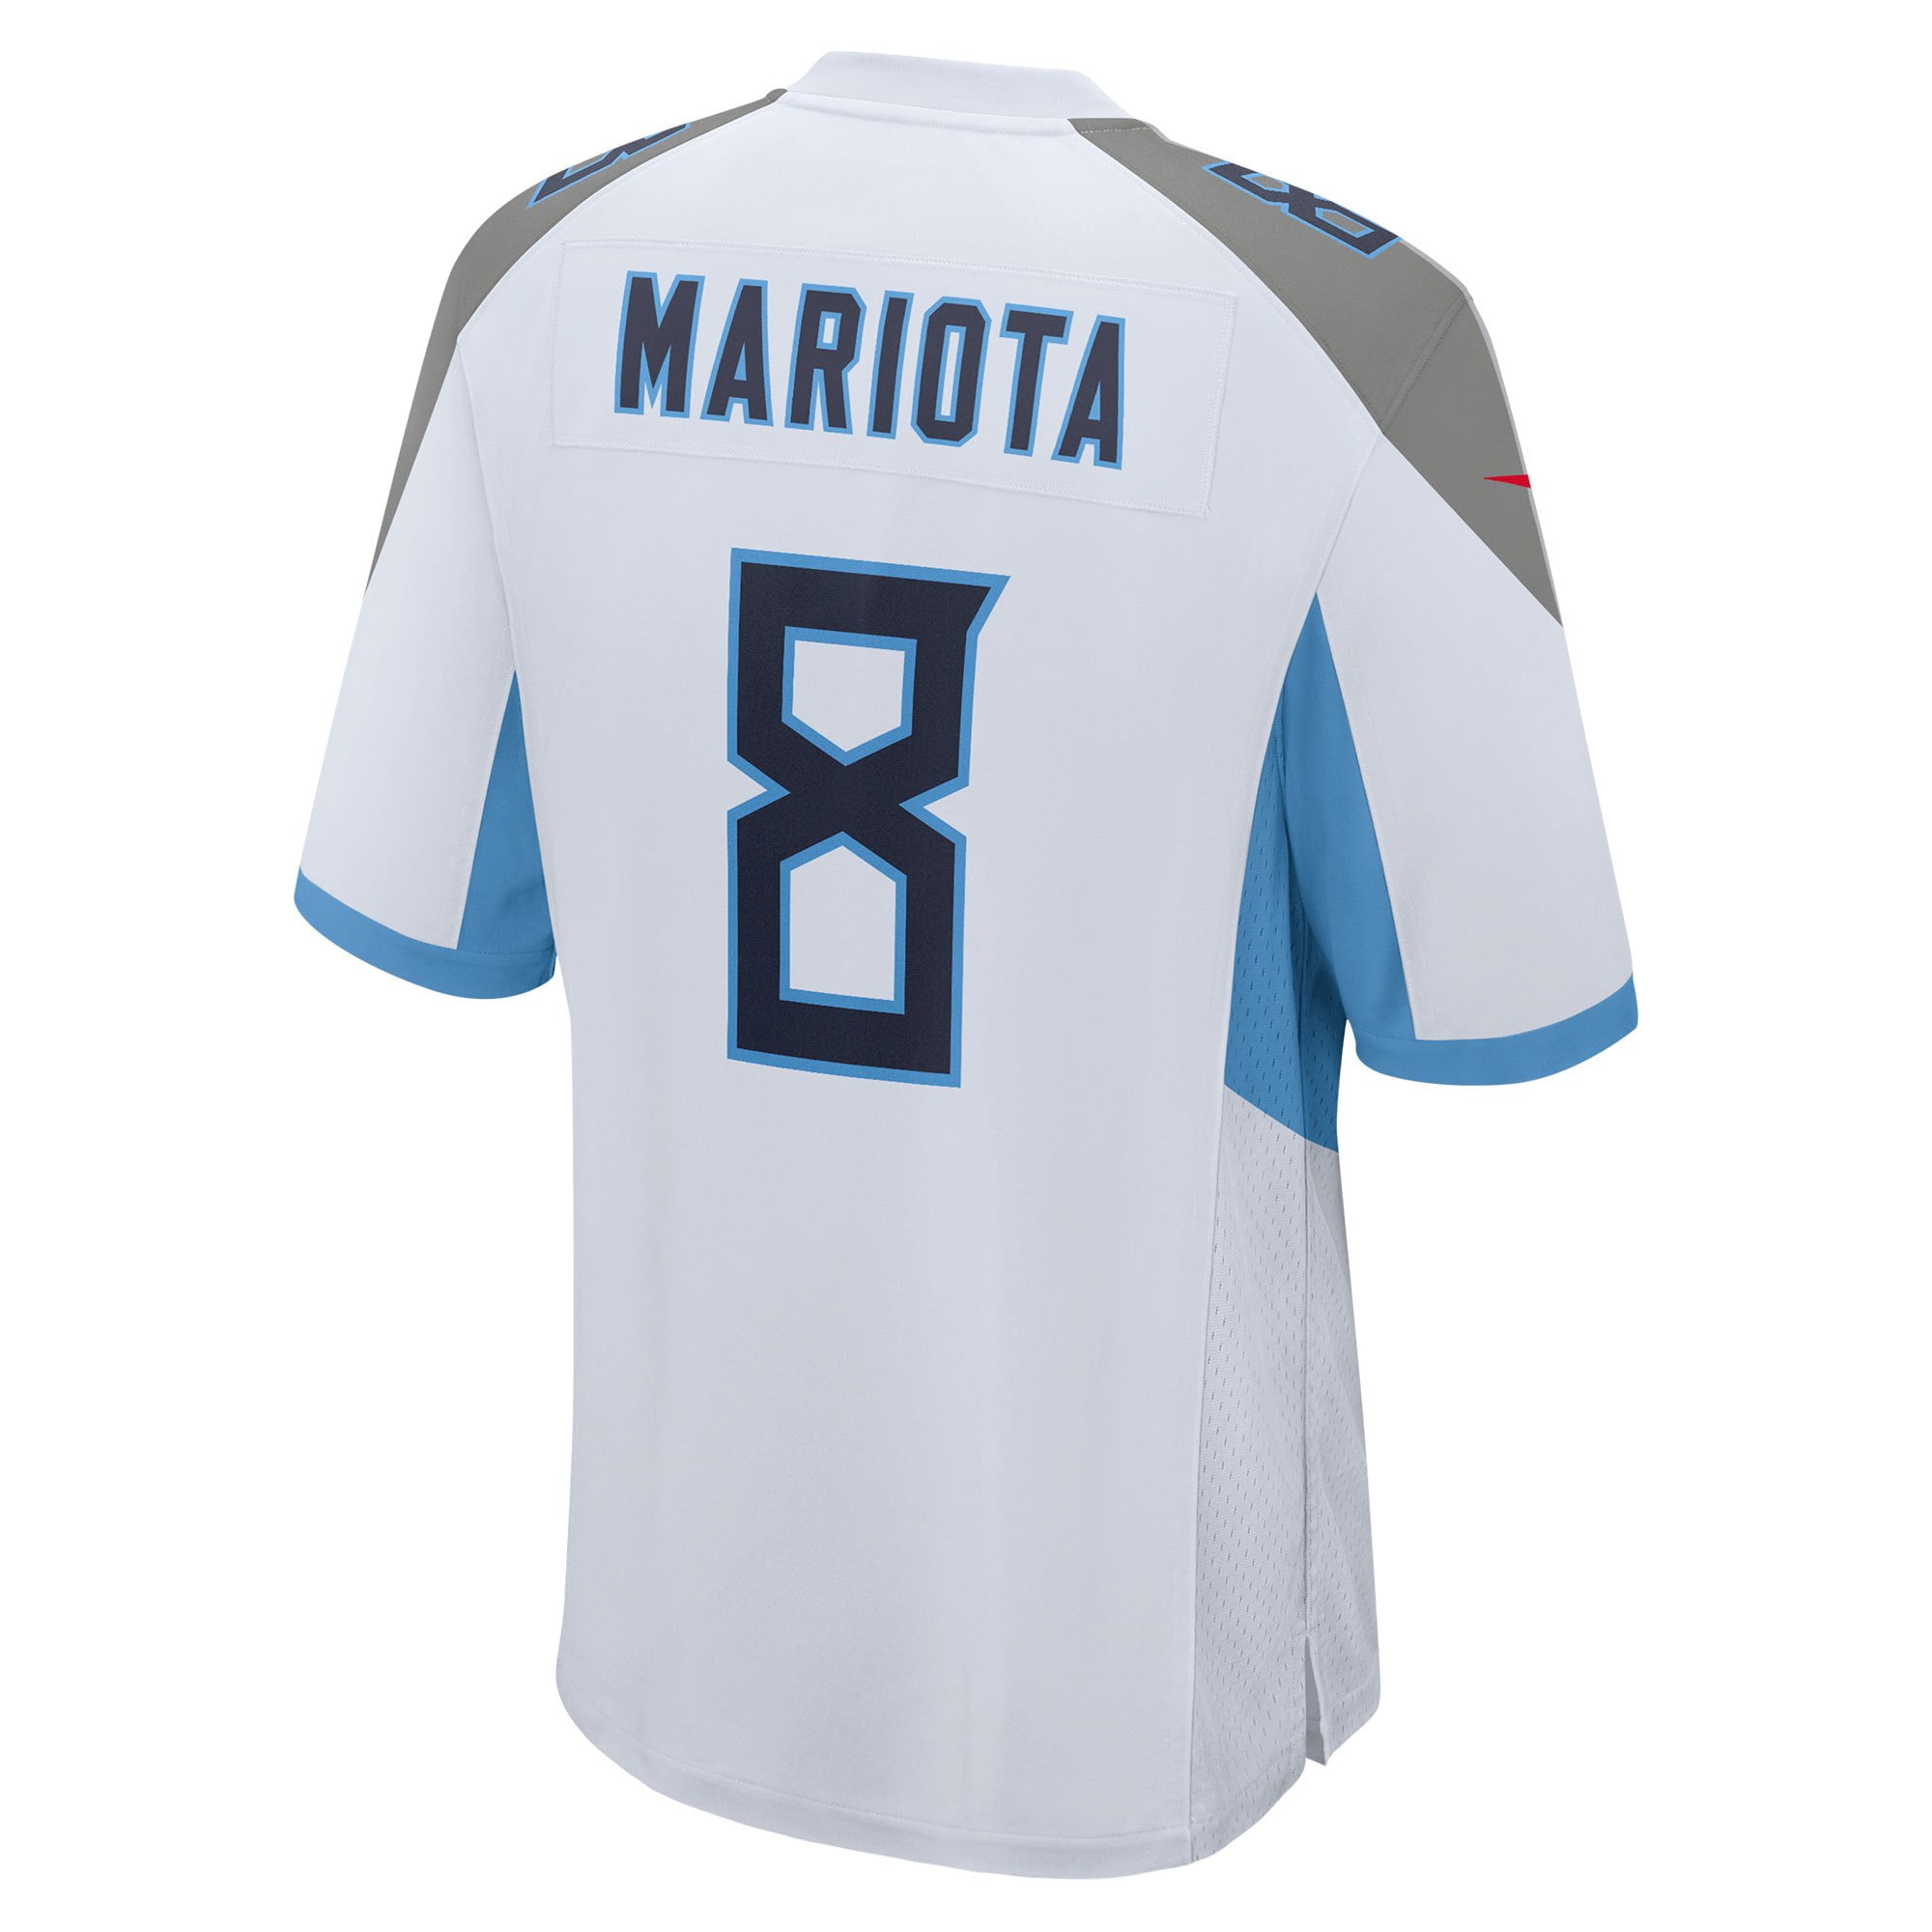 marcus mariota youth football jersey